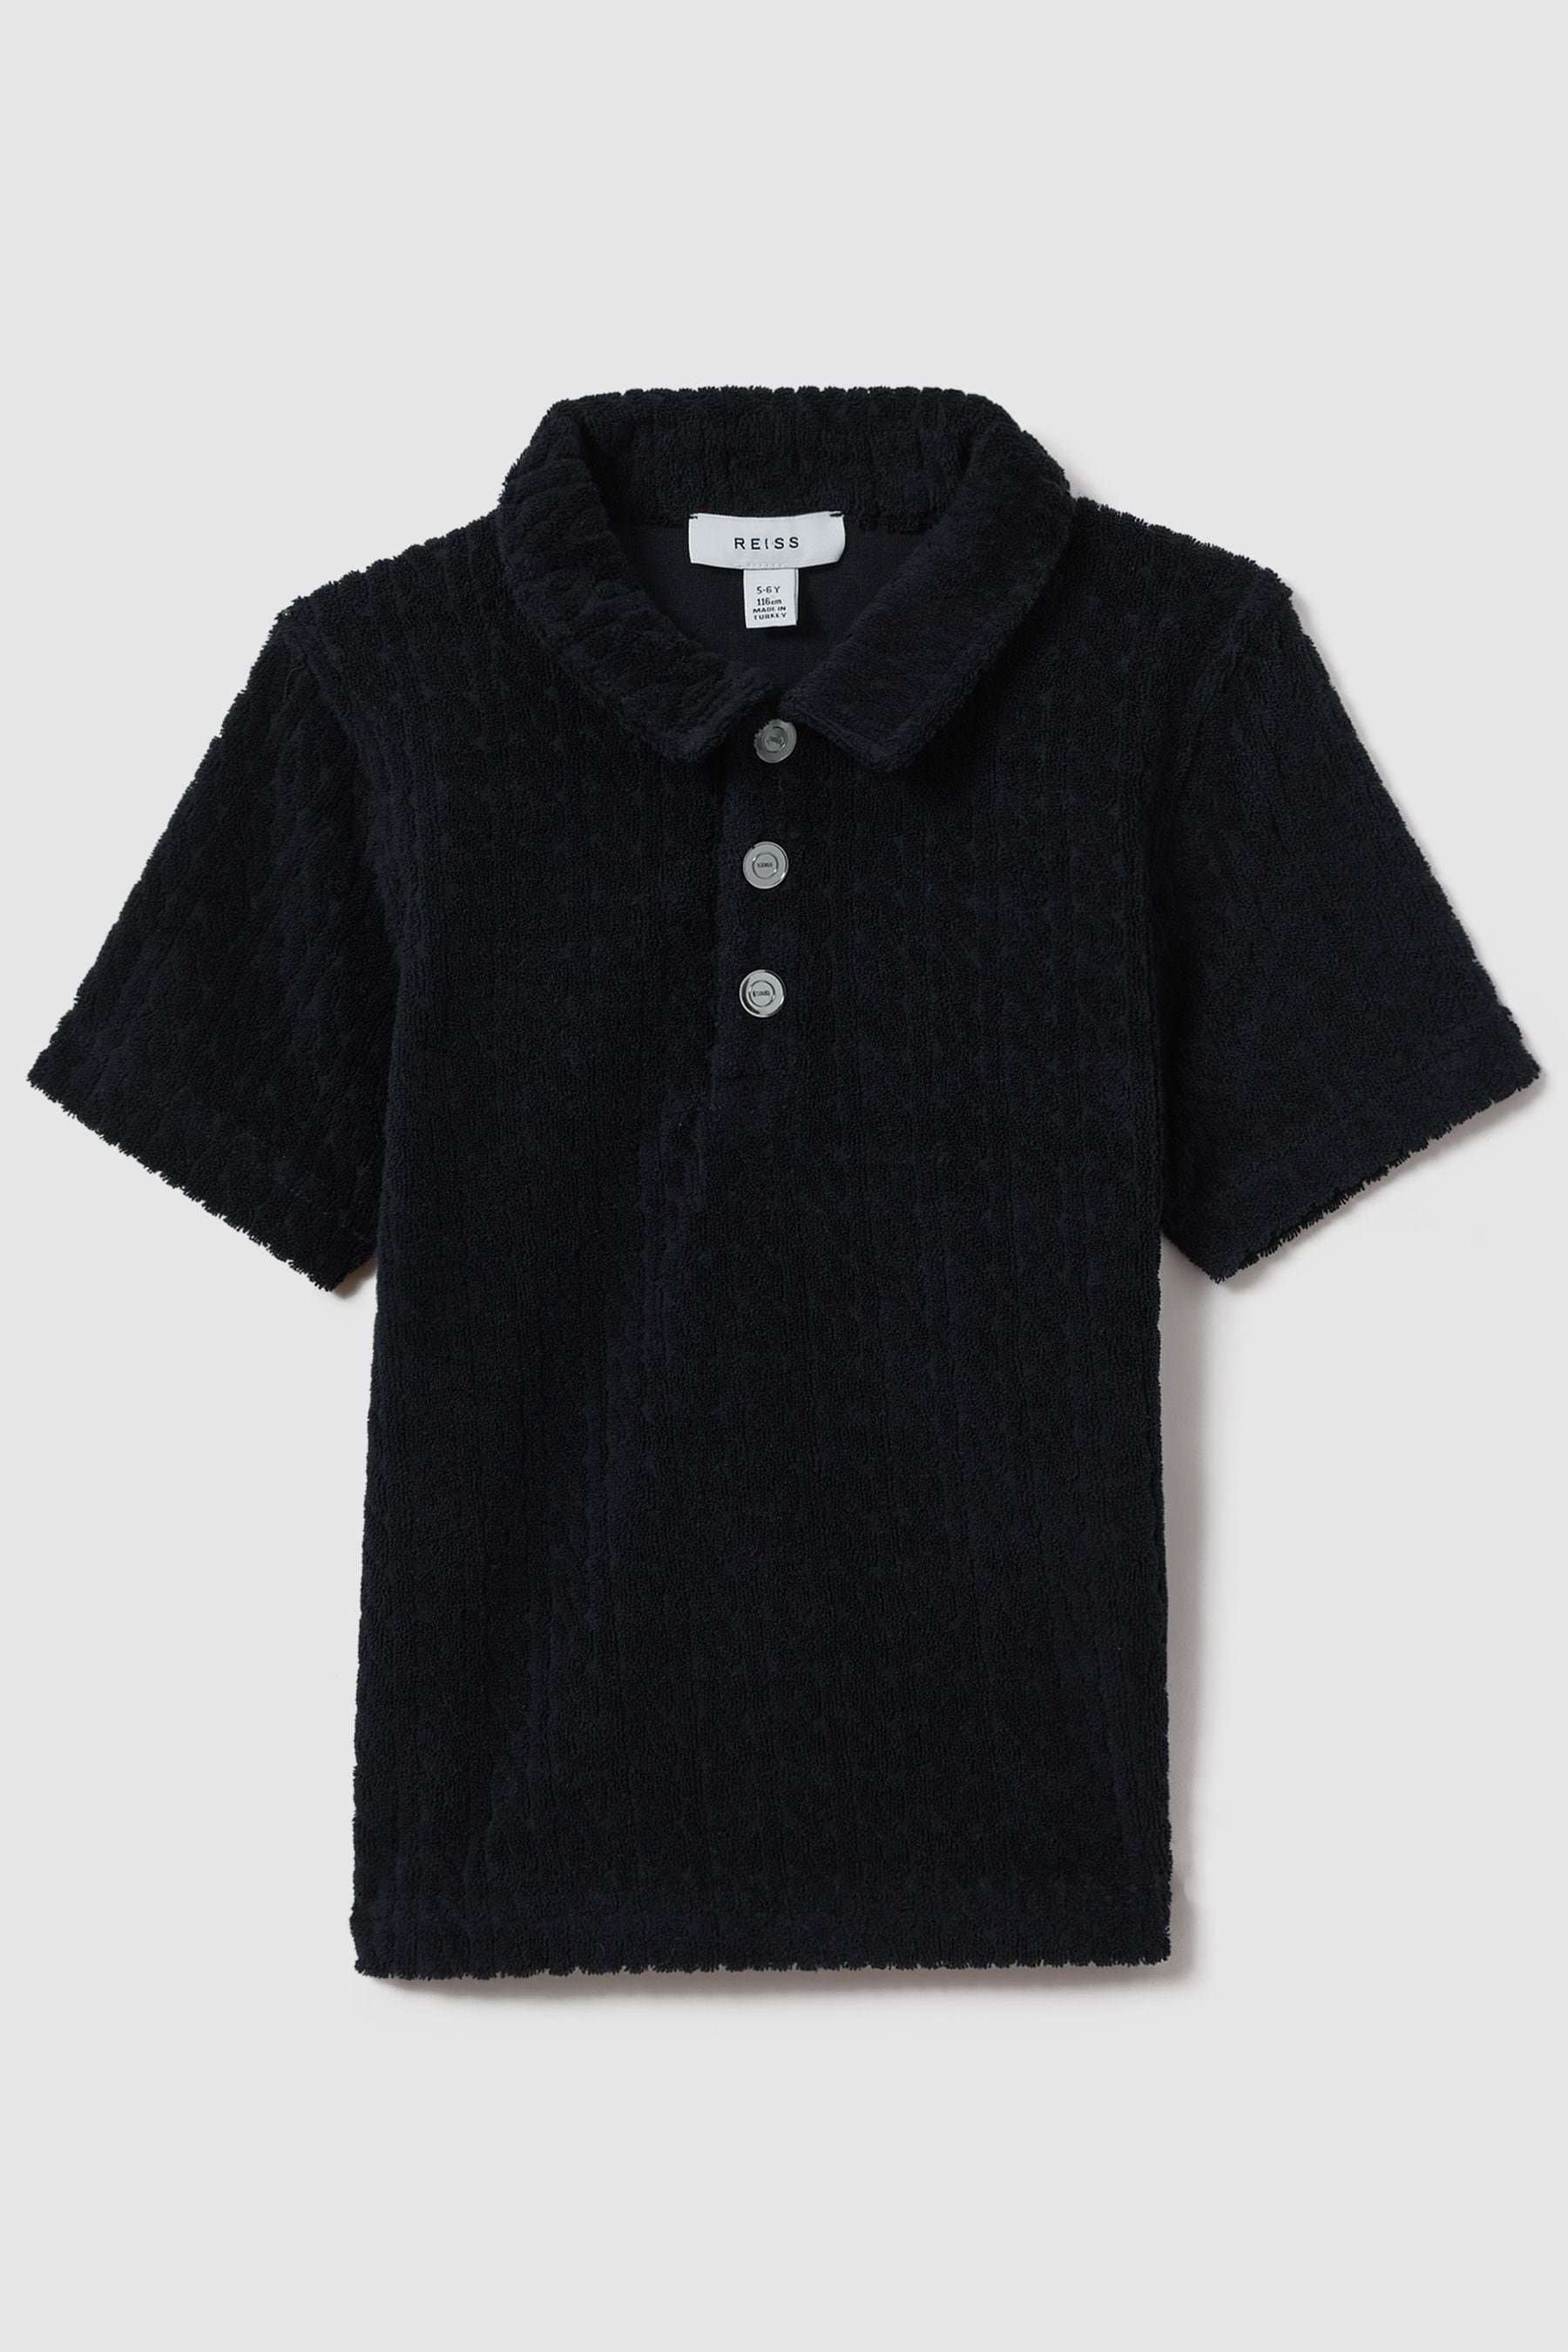 Reiss Kids' Iggy - Navy Towelling Polo Shirt, Uk 13-14 Yrs